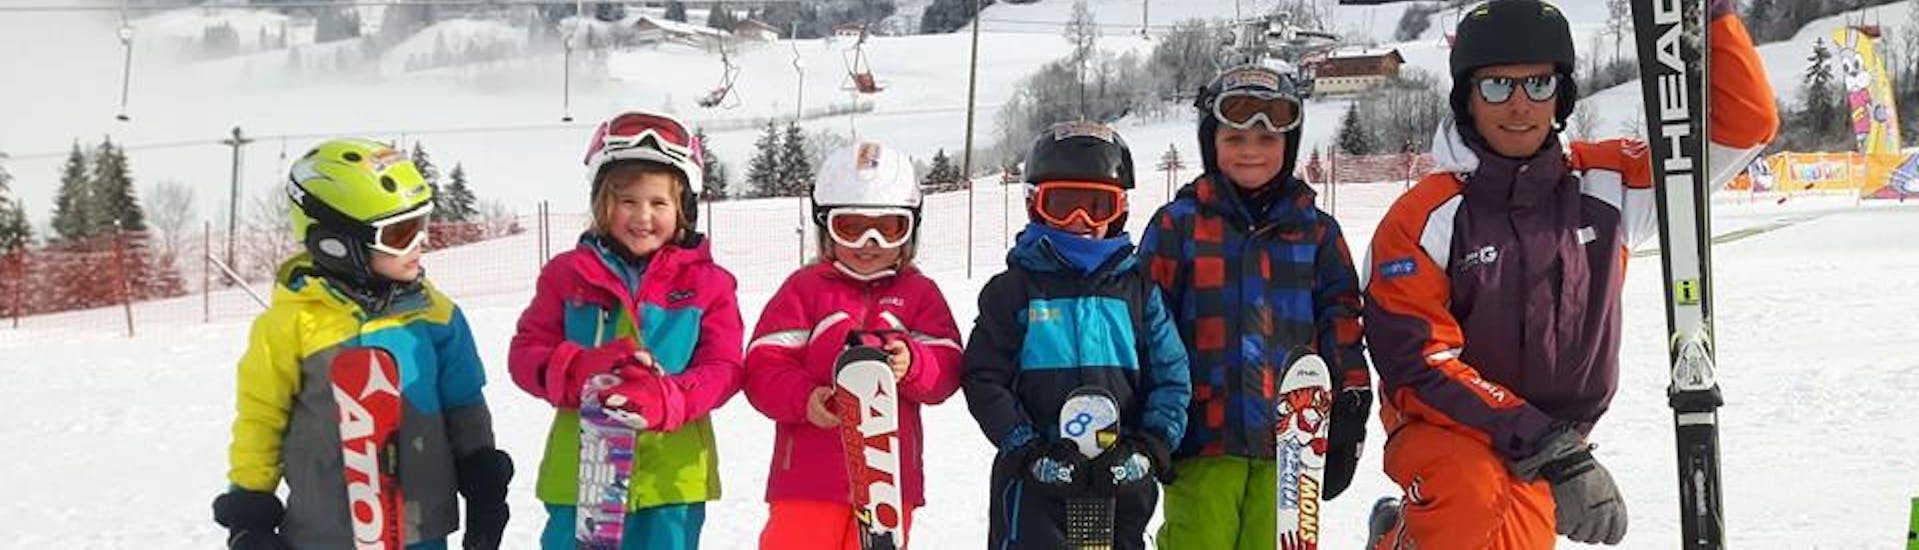 Kinder-Skikurs (4-6 J.) + Skiverleih Package für alle Levels mit Skischule Toni Gruber.